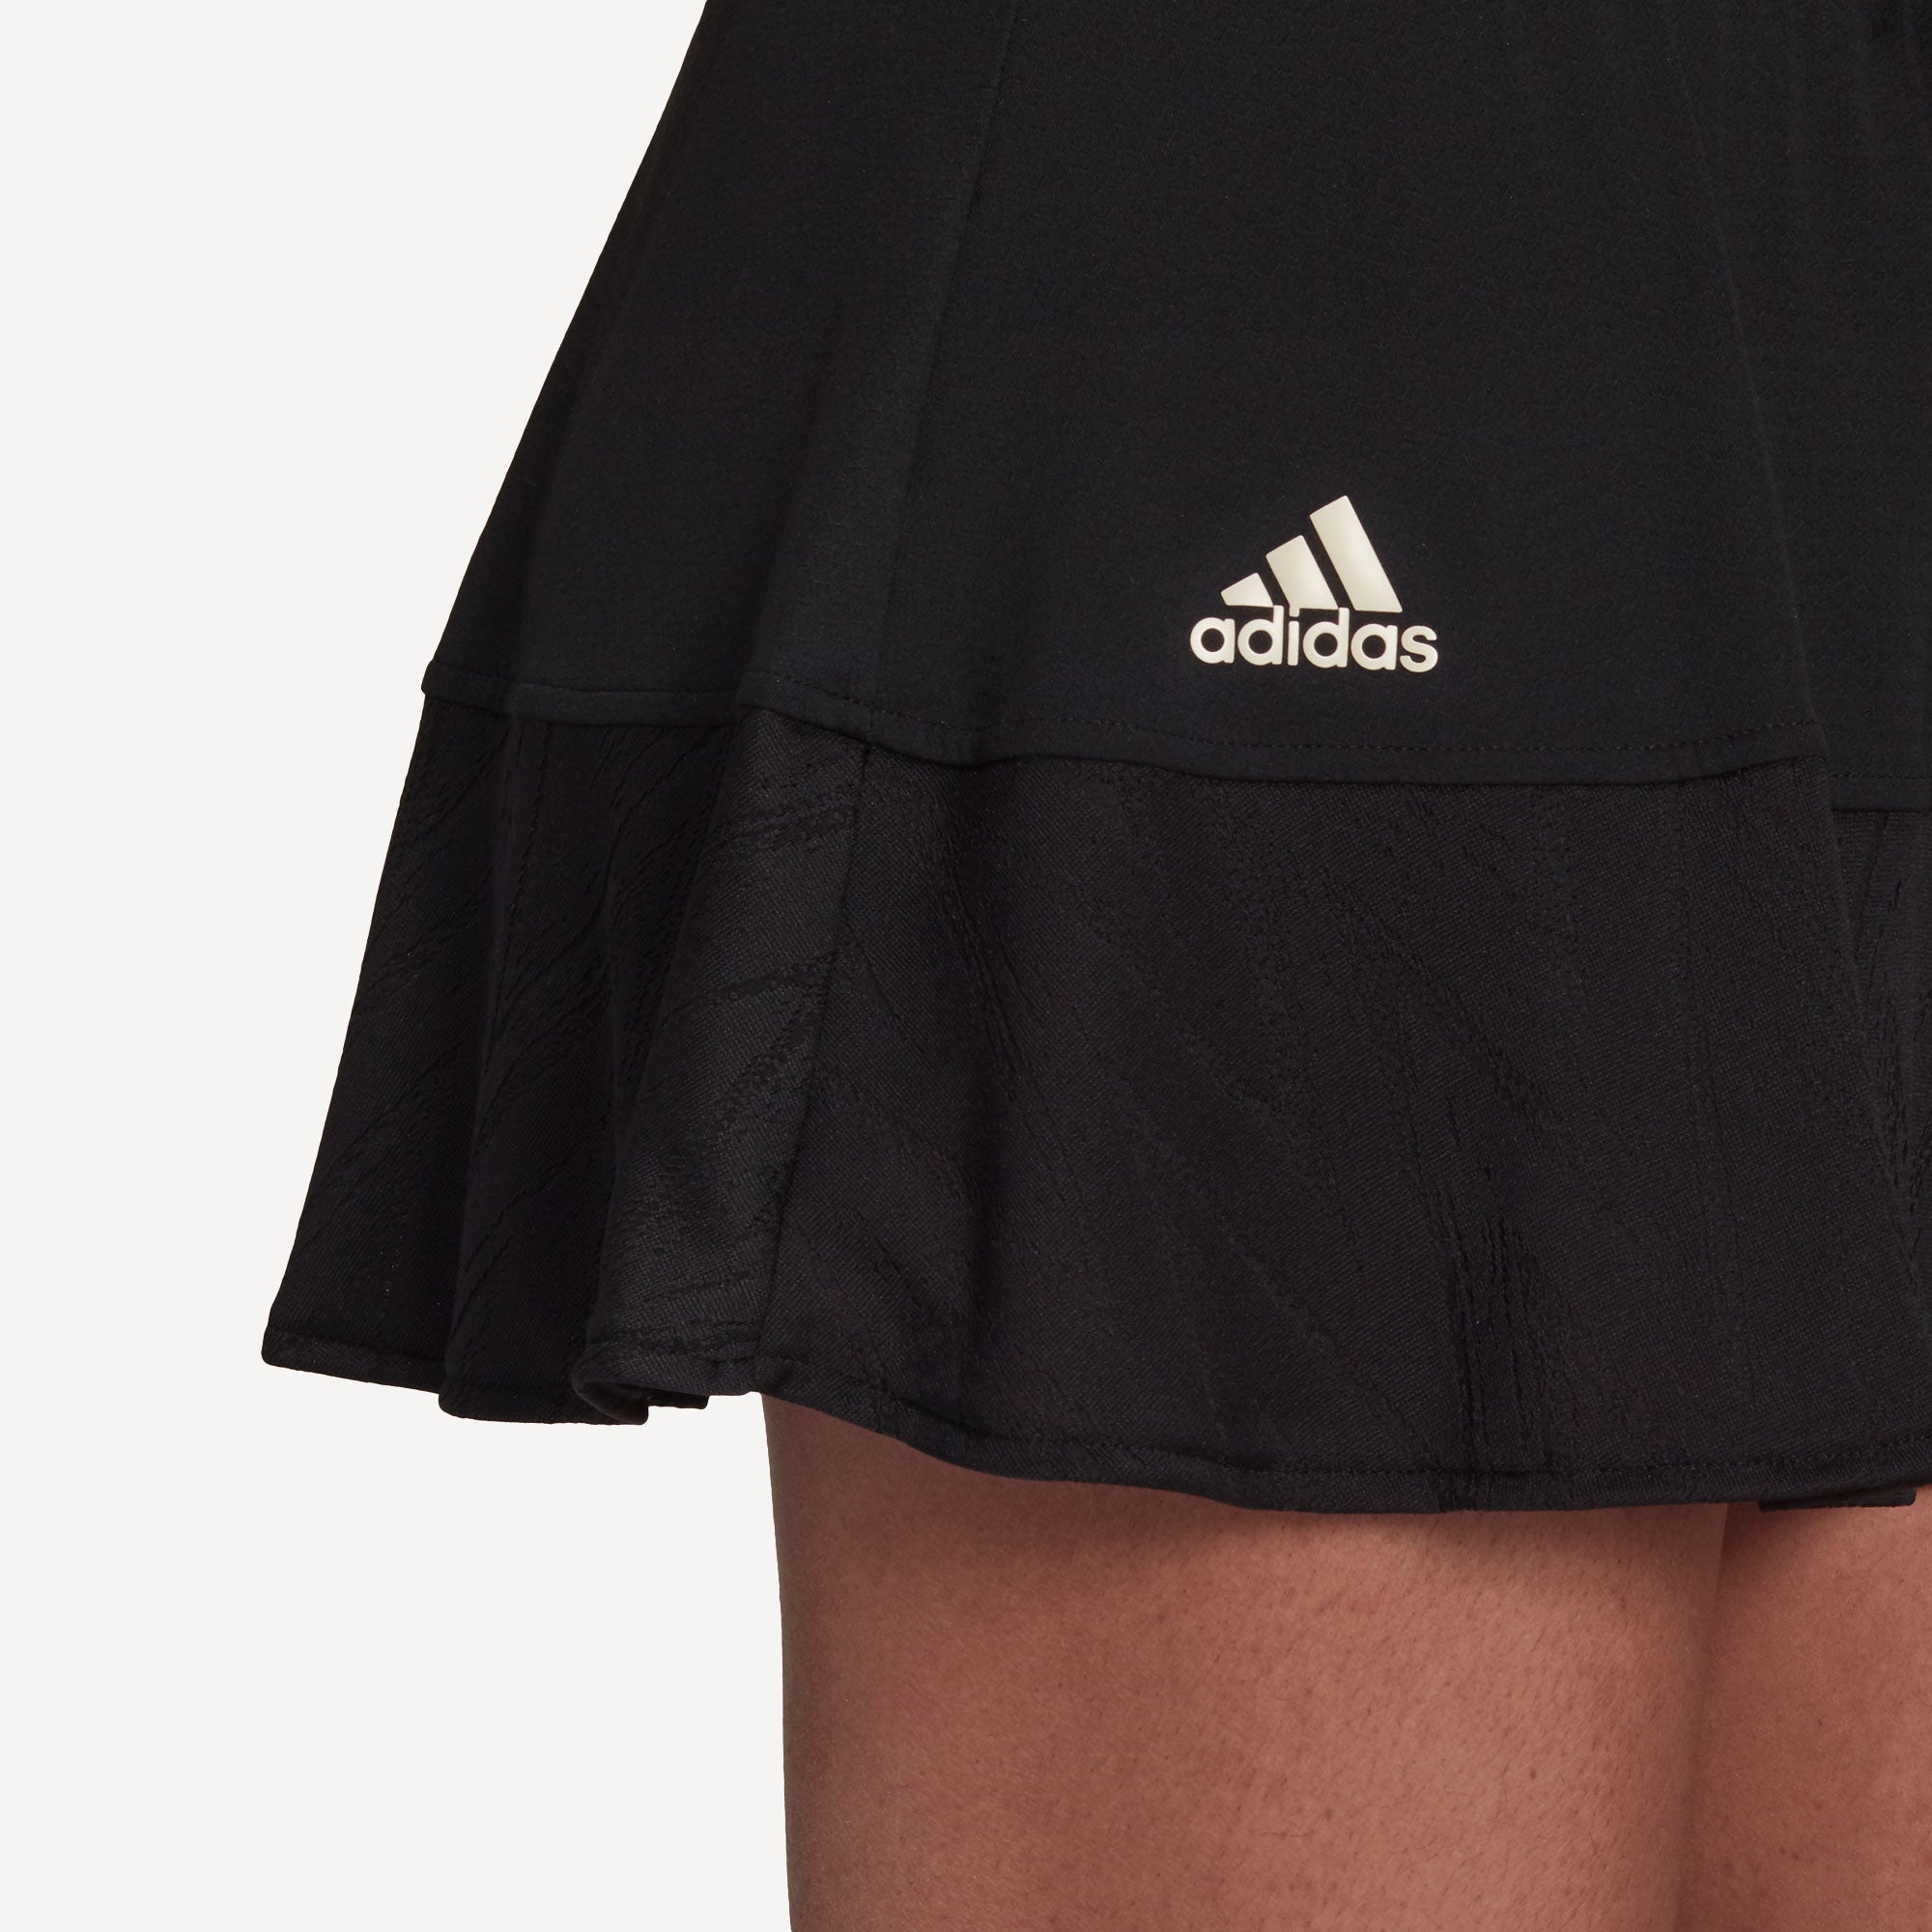 adidas Match Primeblue Women's Tennis Skirt Black (5)